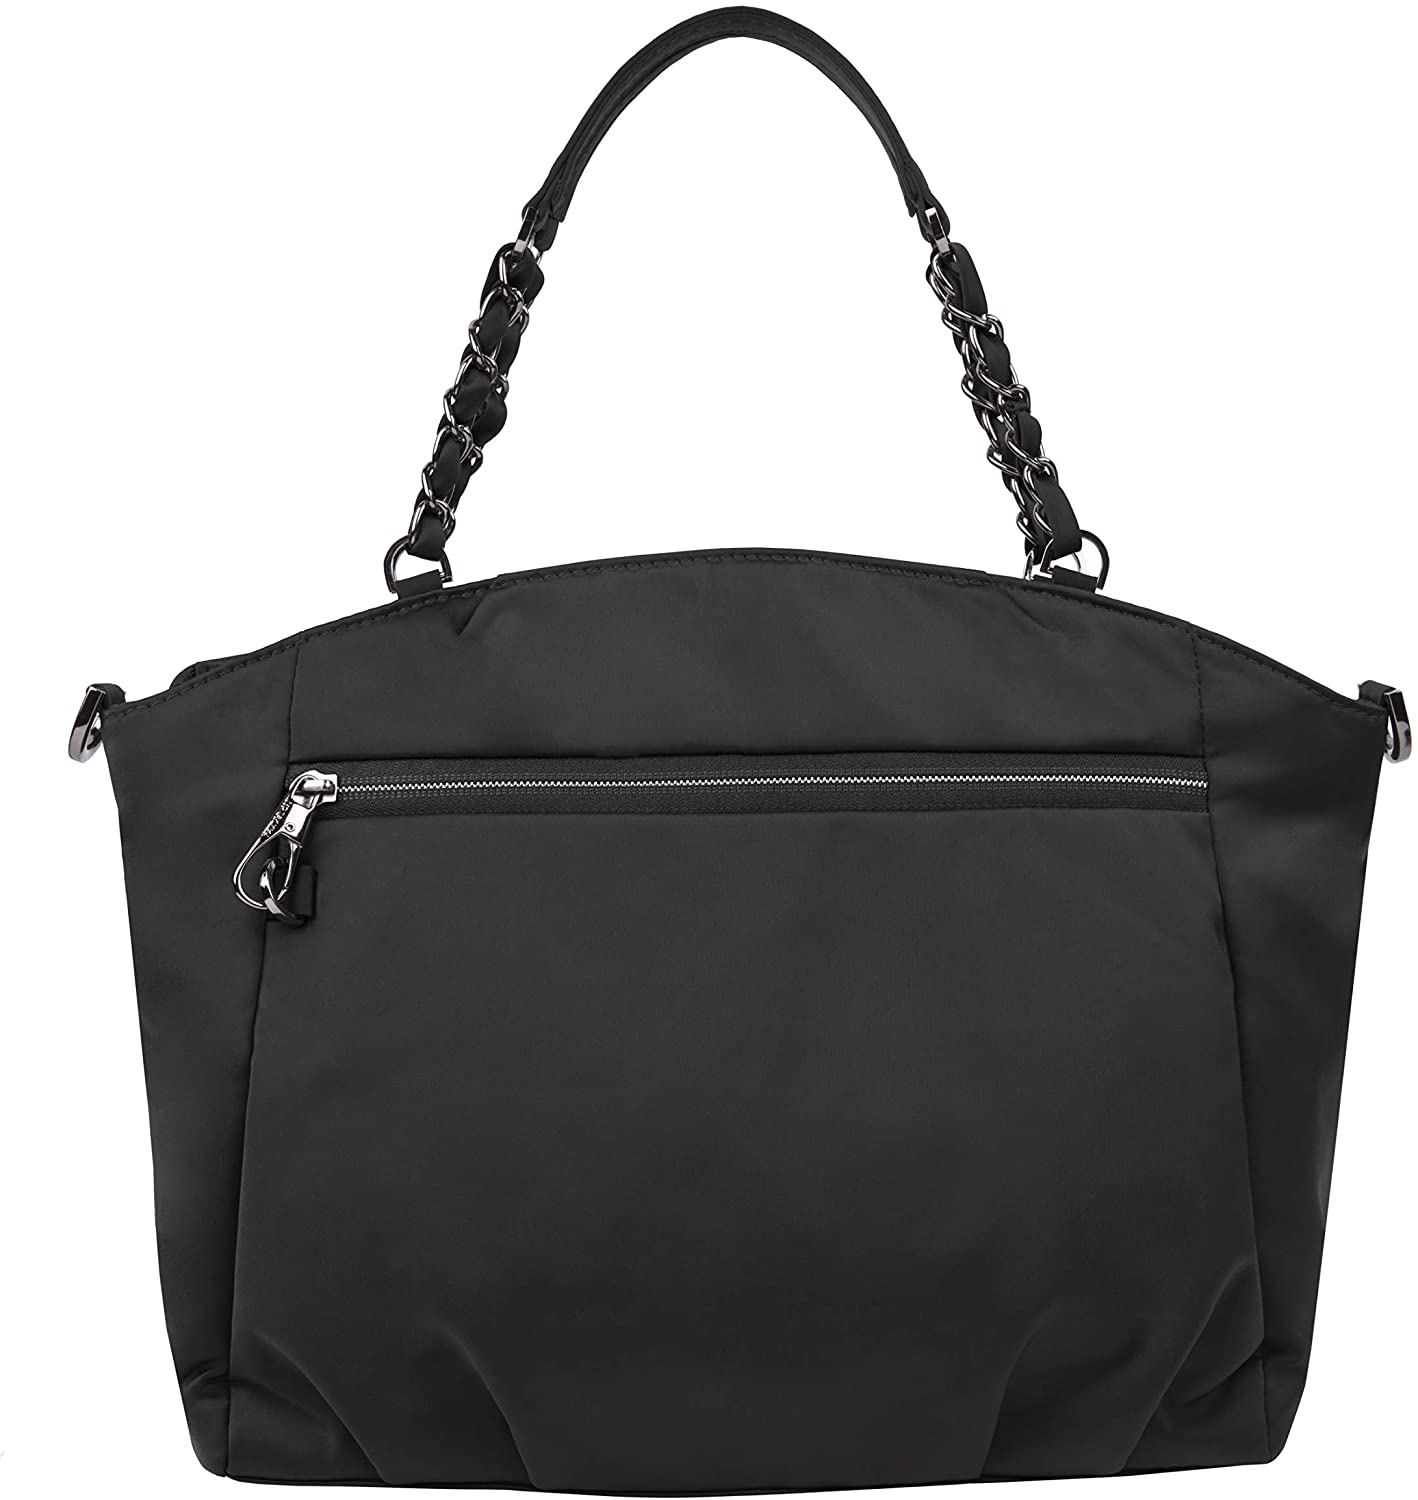 Travelon Satchel Crossbody Bag, Black, 43409